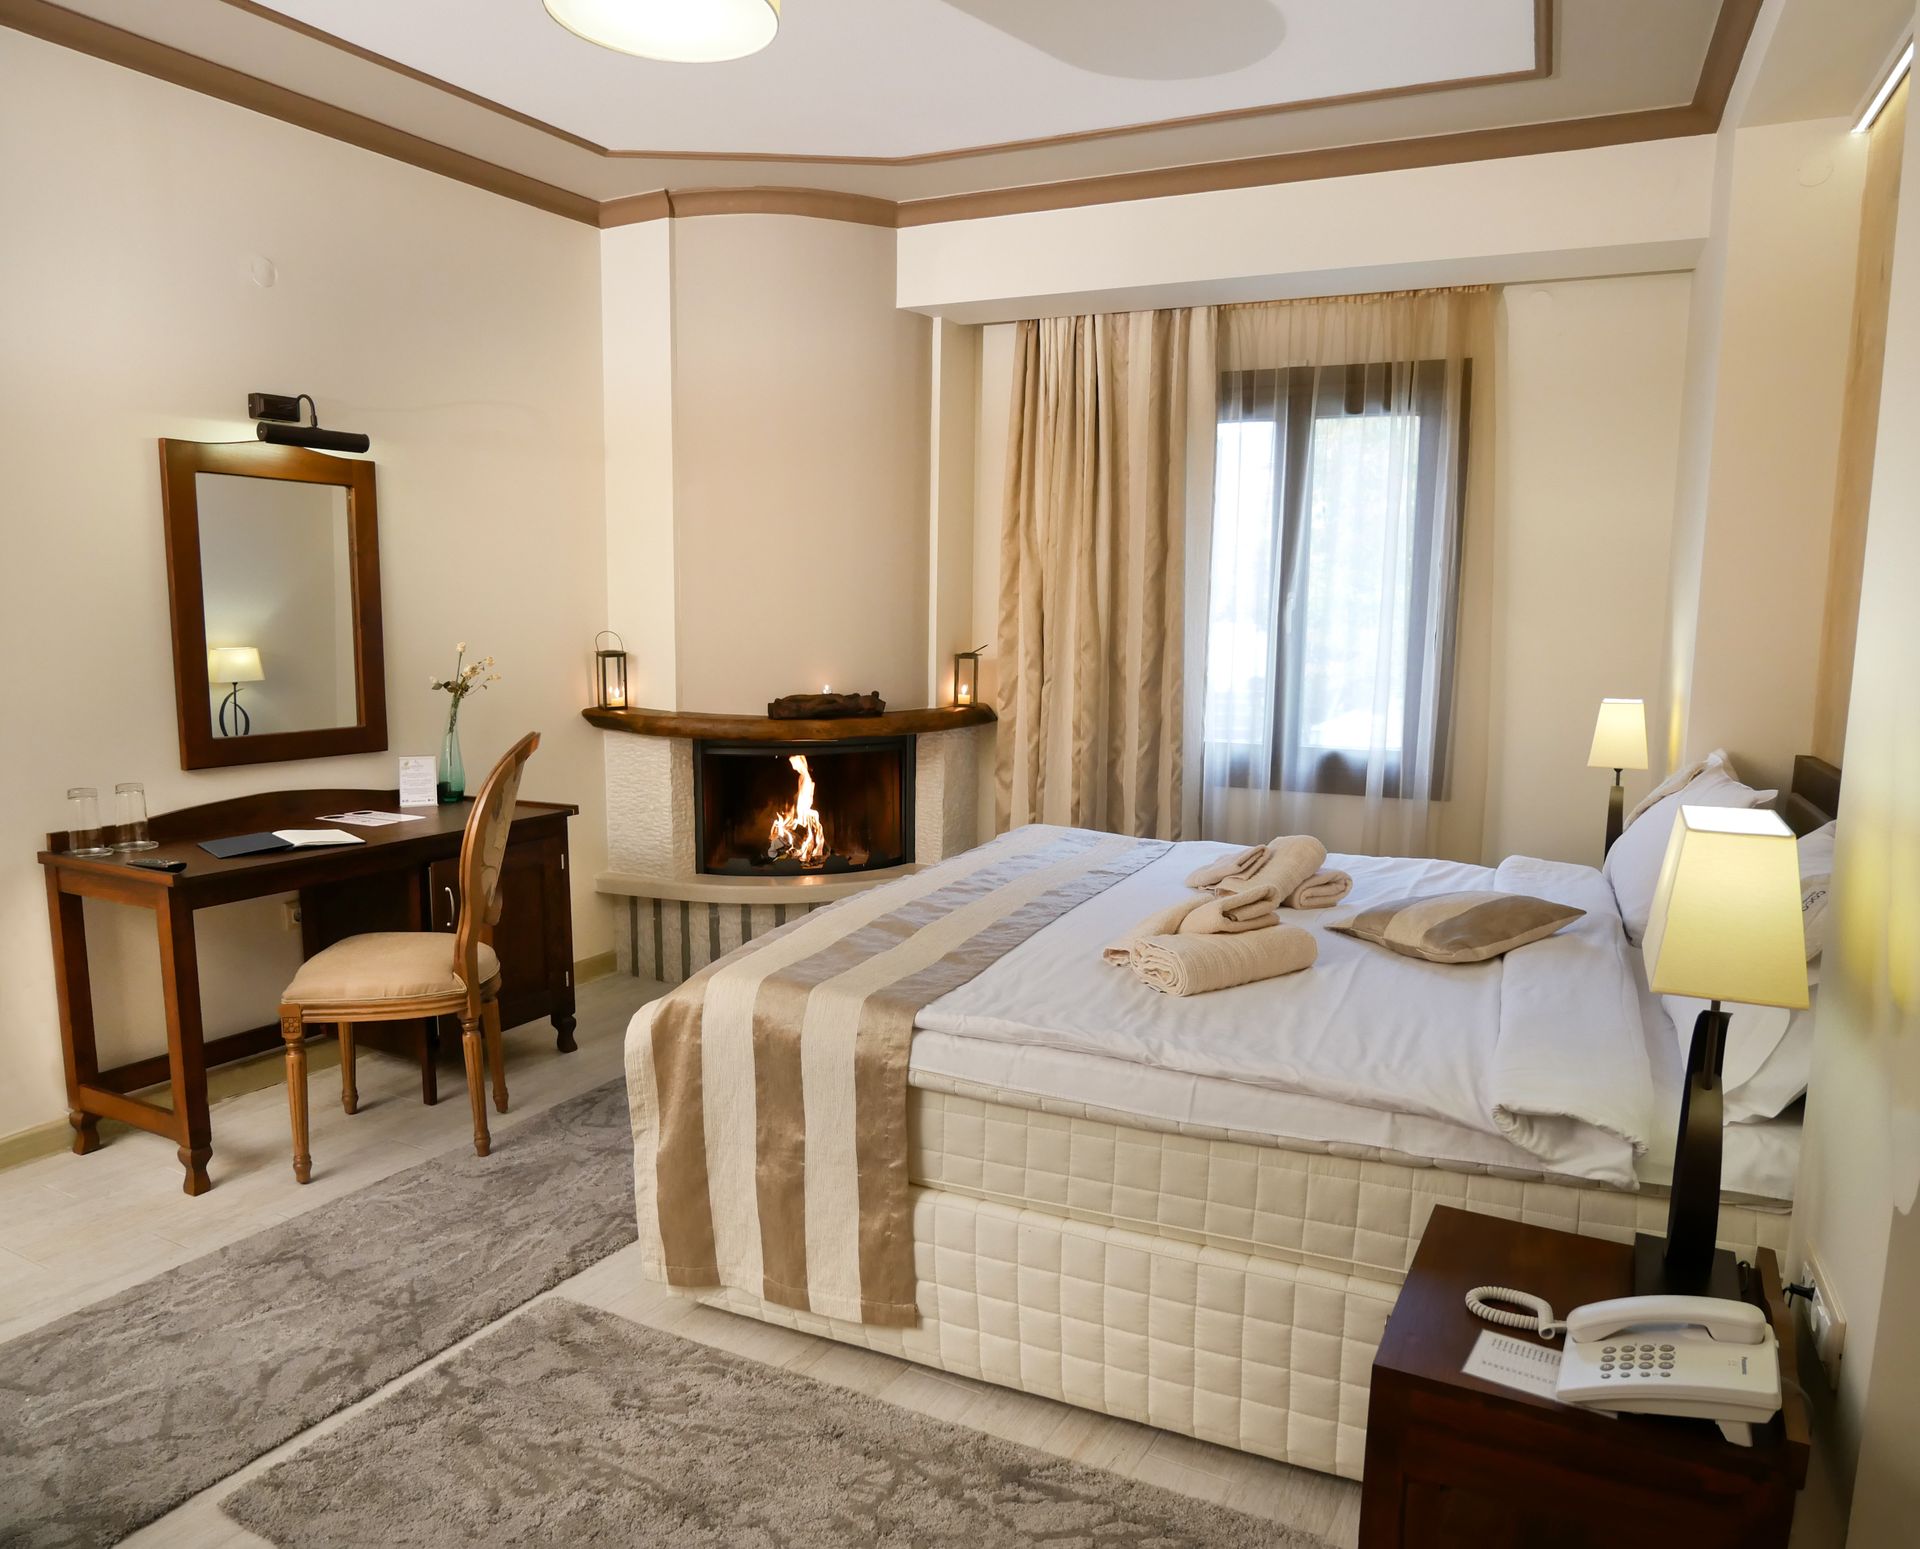 Rodovoli Hotel Konitsa – Κόνιτσα ✦ -19% ✦ 2 Ημέρες (1 Διανυκτέρευση) ✦ 2 άτομα + 1 παιδί έως 2 ετών ✦ 2 ✦ έως 31/12/2022 ✦ Early check in και Late check out κατόπιν διαθεσιμότητας!